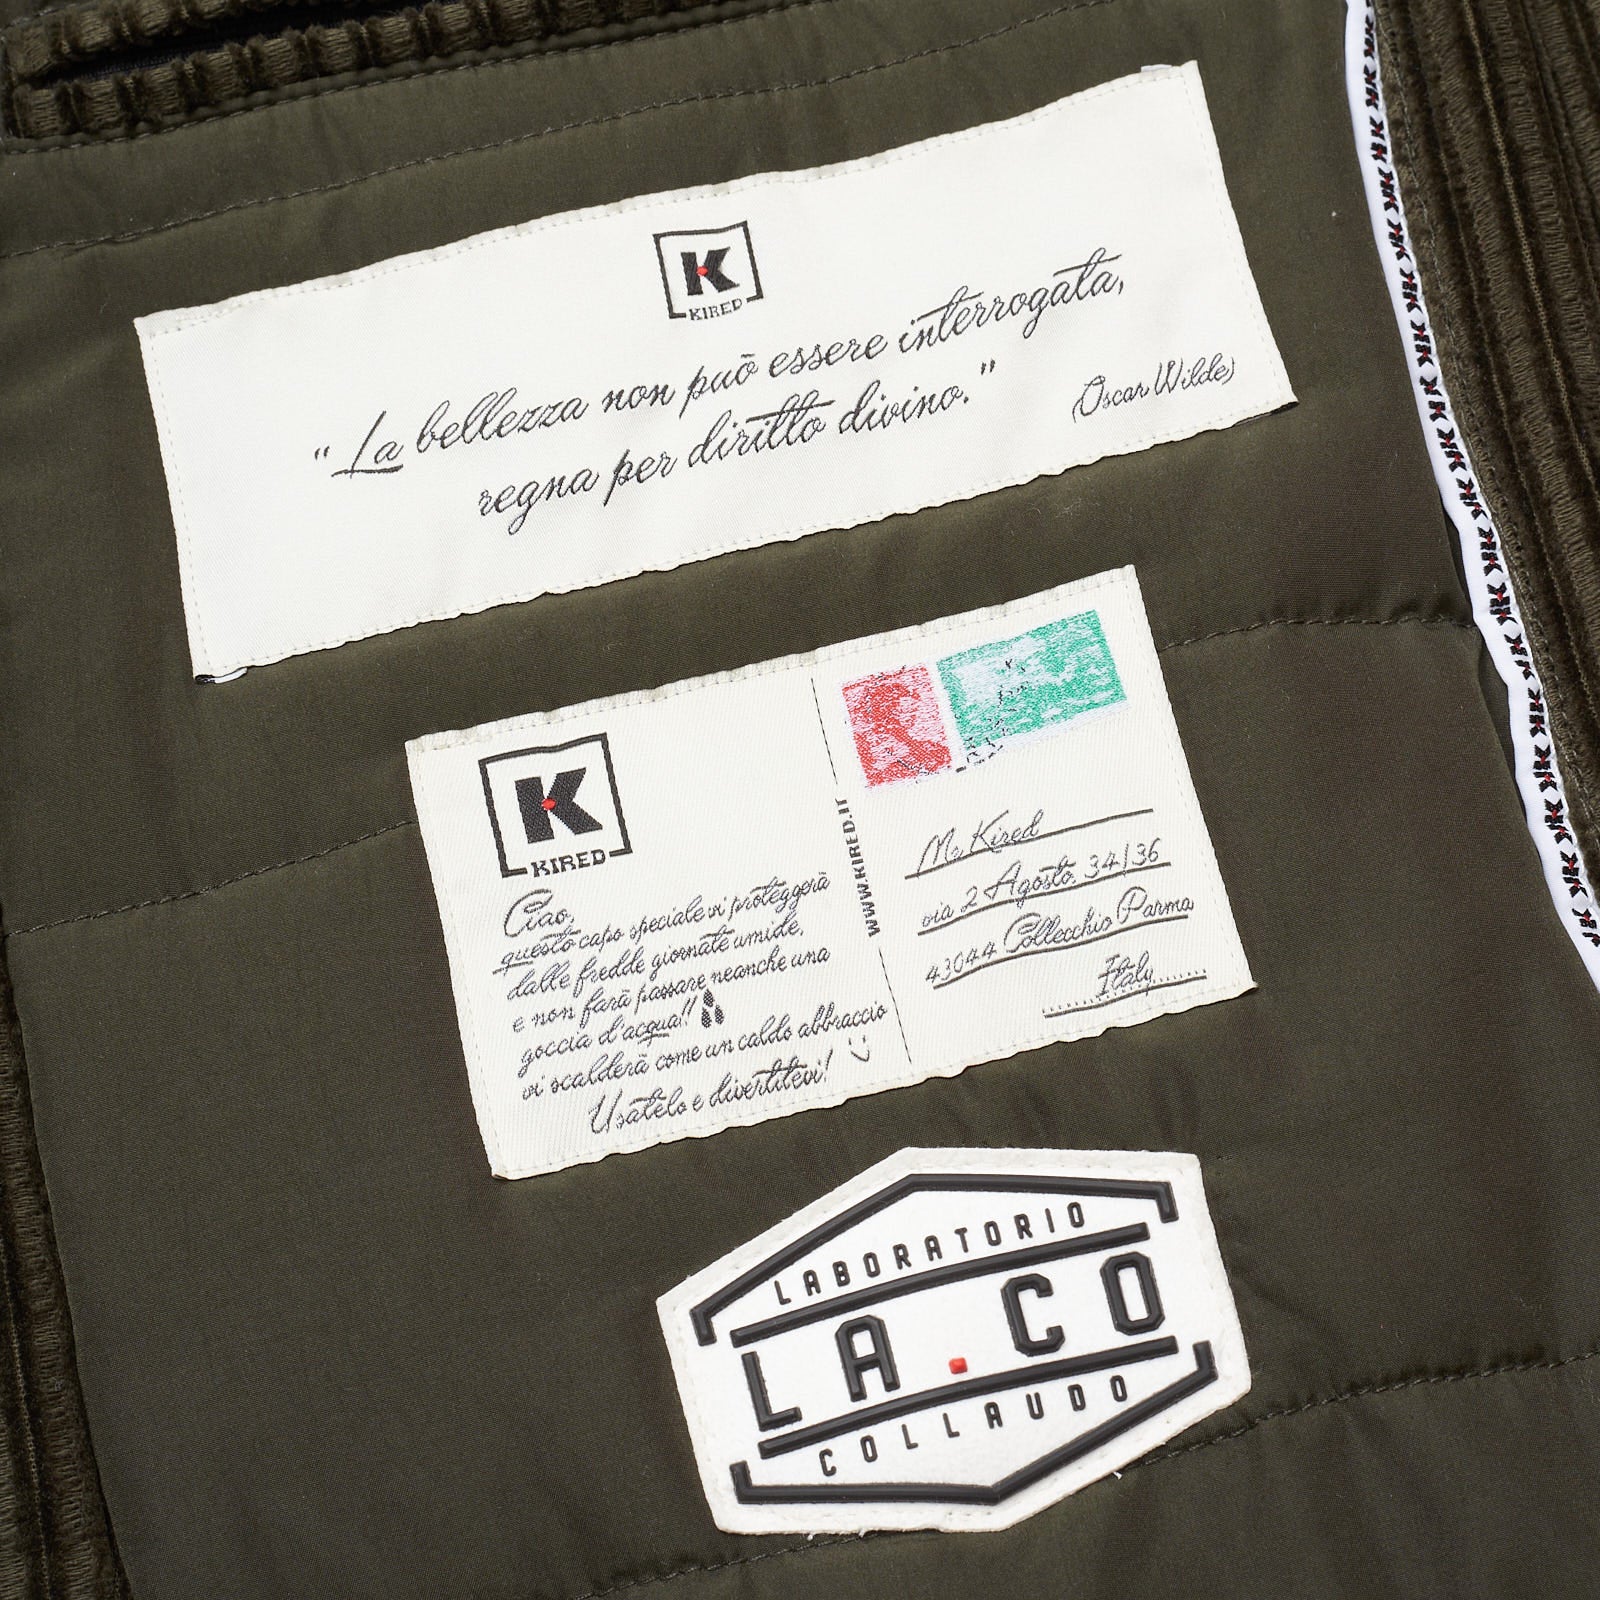 KITON KIRED "Oglio" Green Corduroy Primaloft DB Pea Coat Jacket EU 50 US 40 KIRED